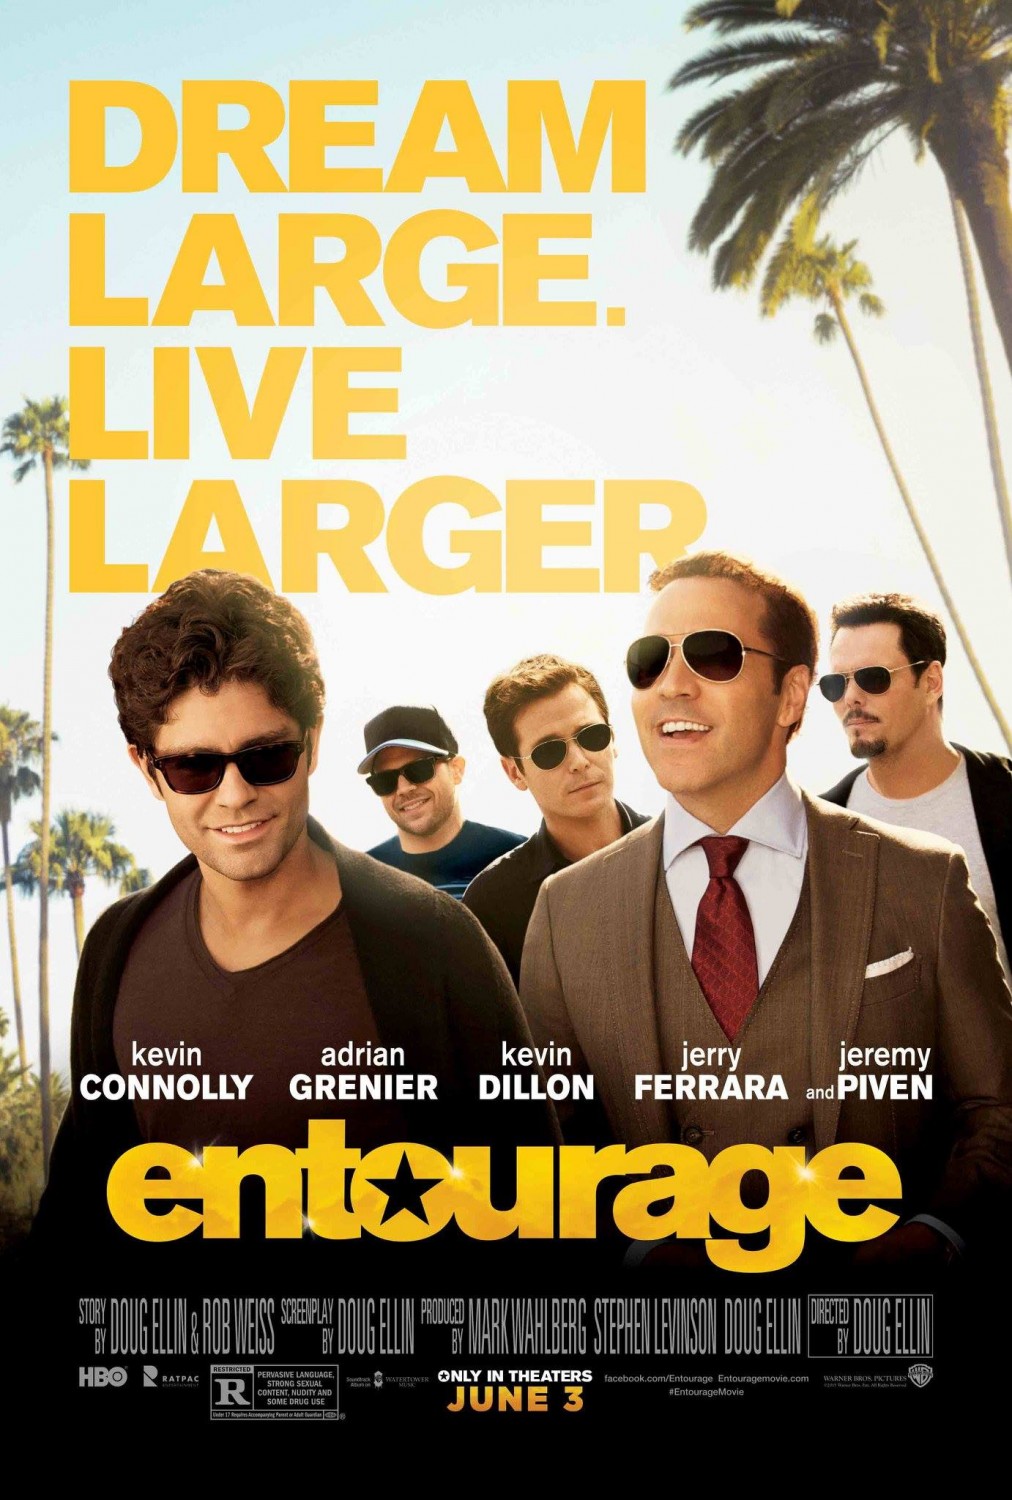 Extra Large Movie Poster Image for Entourage (#8 of 10)